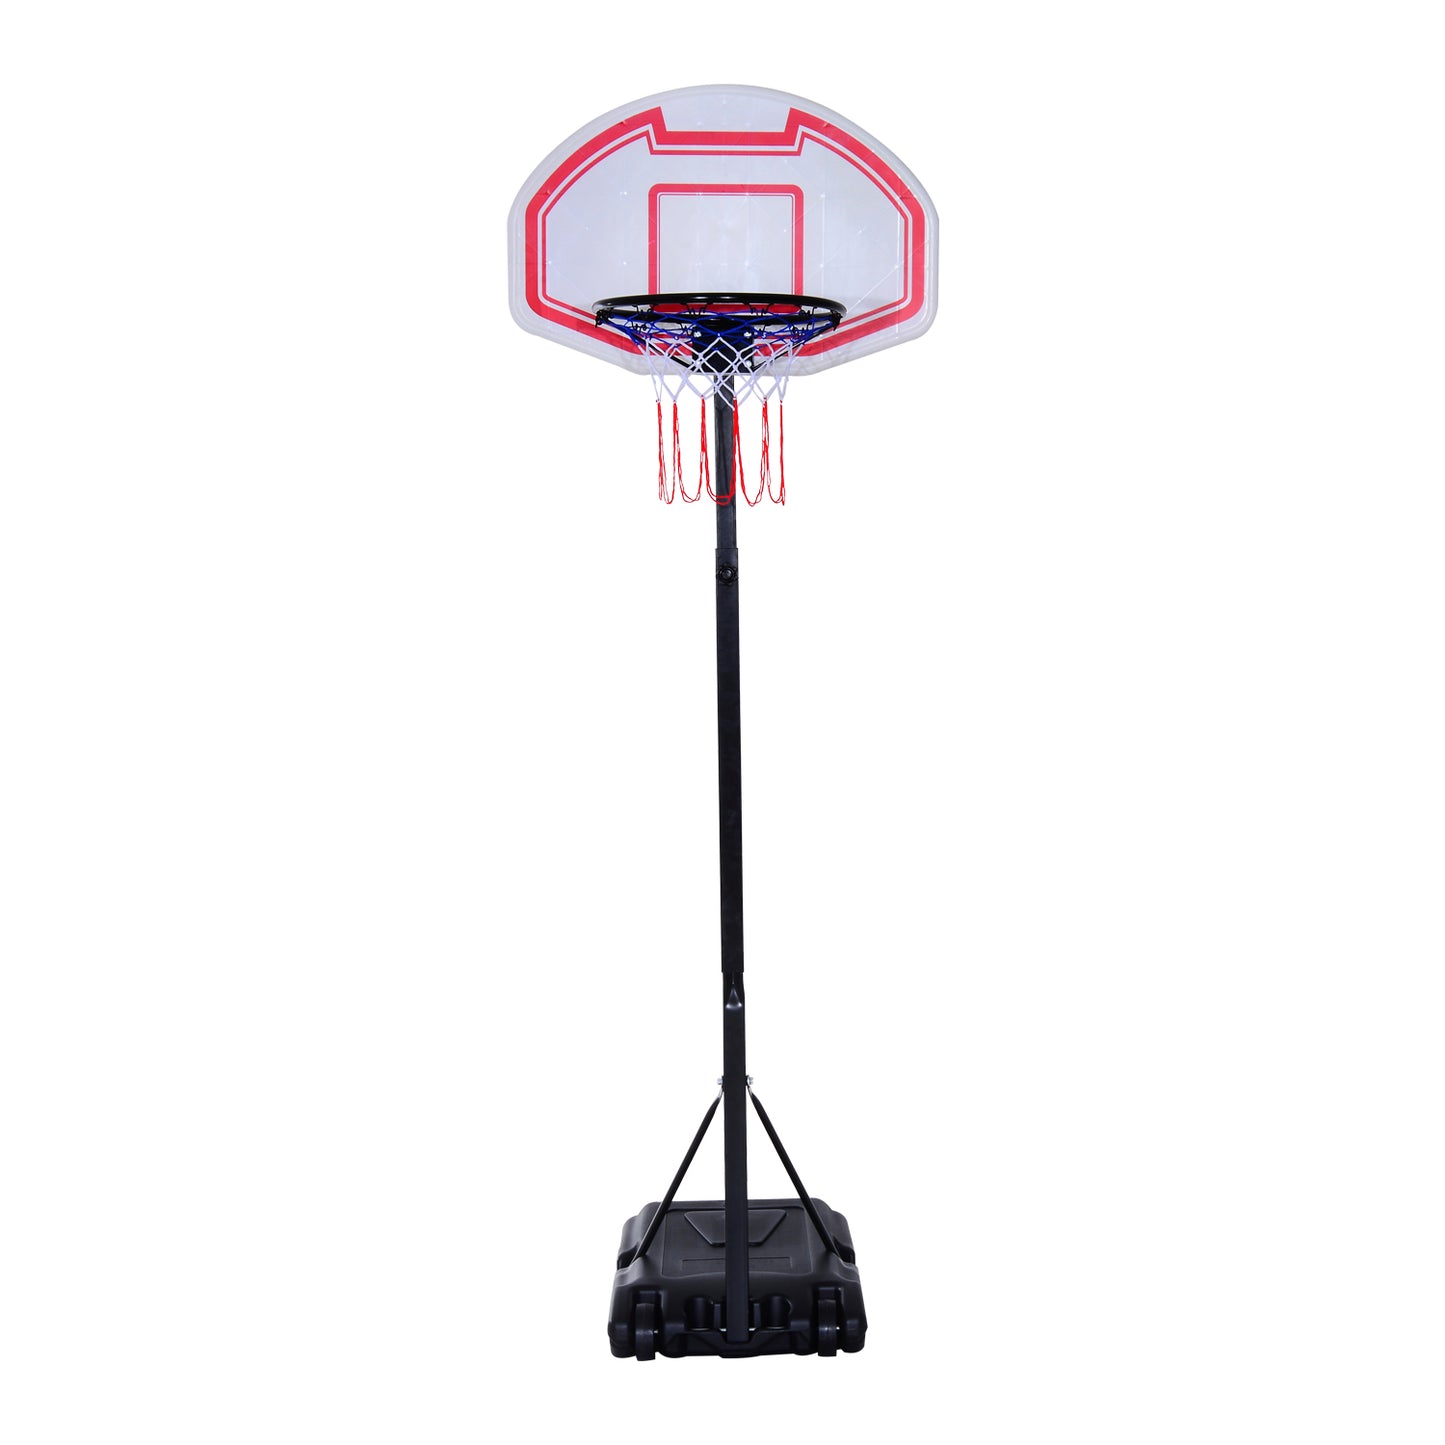 HOMCOM Portable Basketball Stand Net Hoop W/ Wheels-Black/White